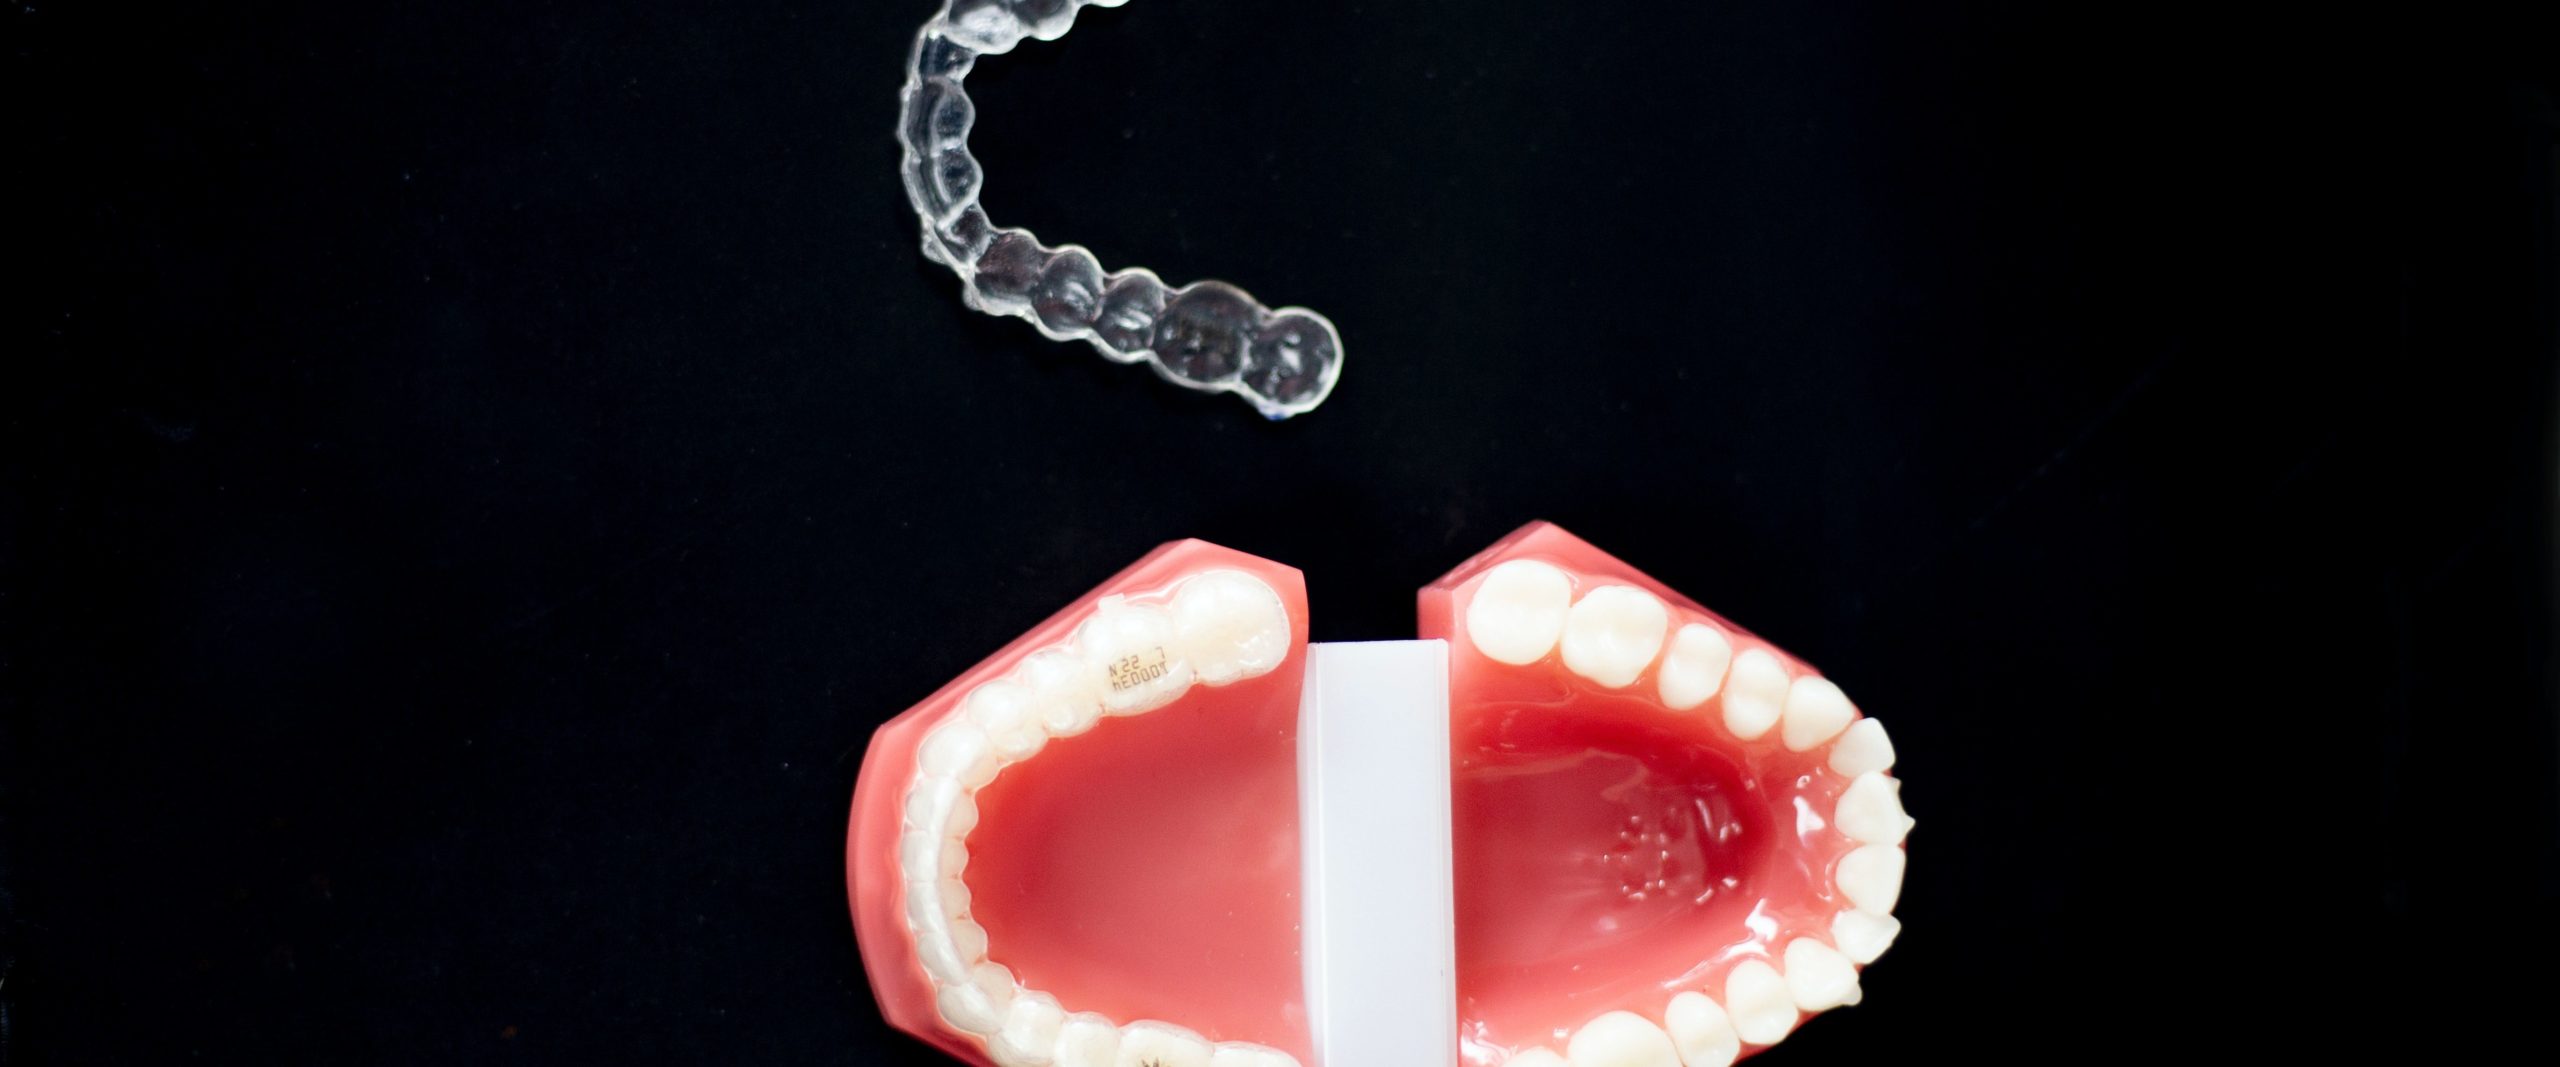 Dental mouth guard next to teeth